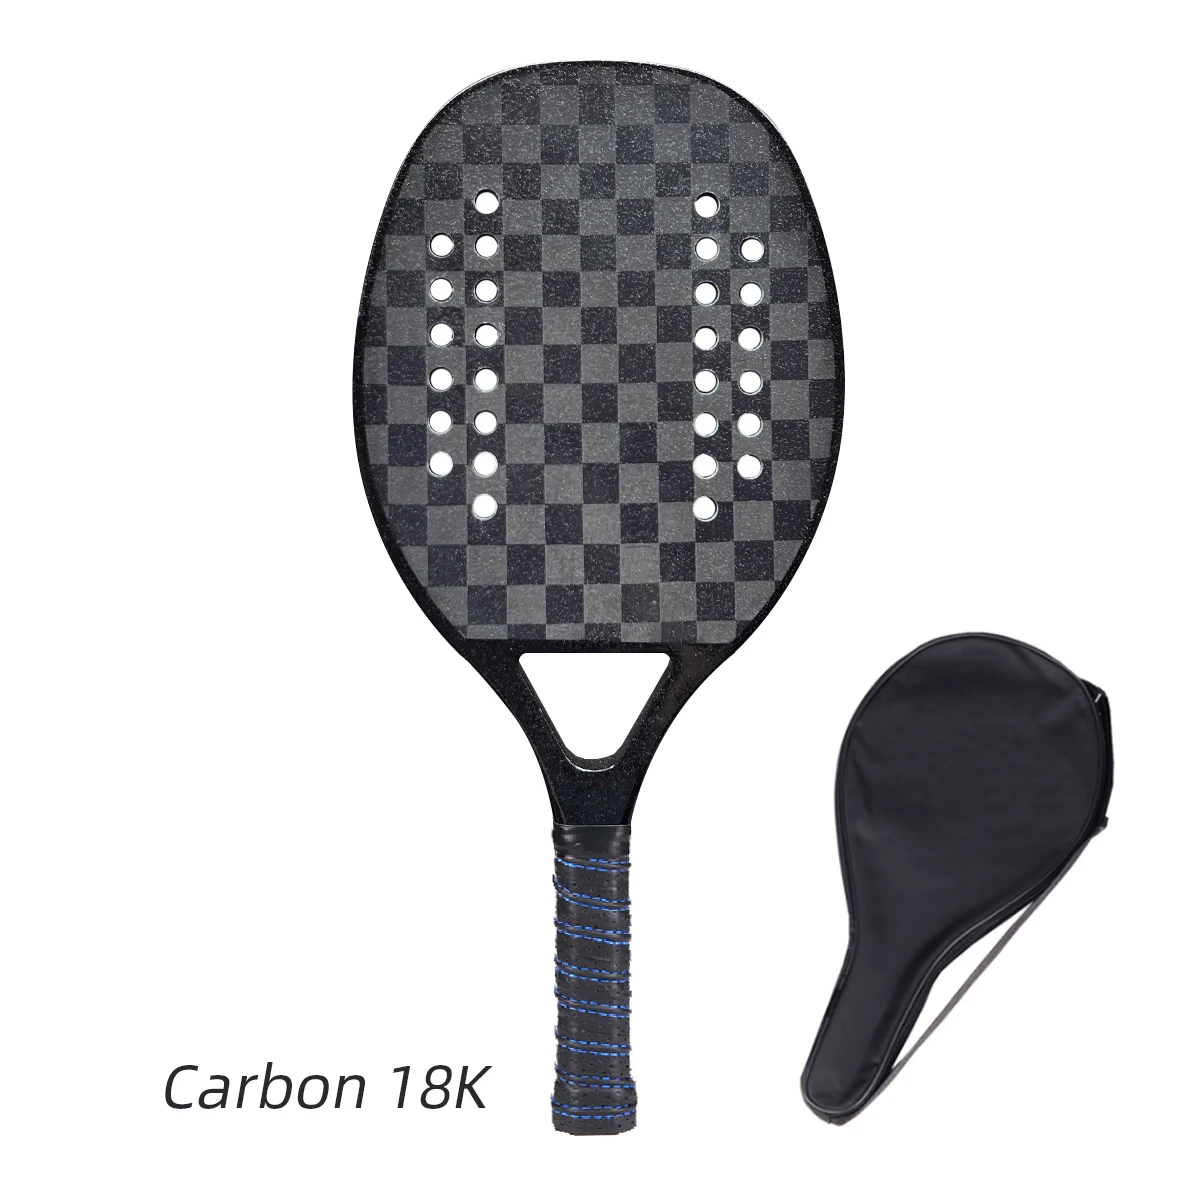 Professional Full Carbon Fiber 3K 12K 18K Beach Tennis Racket Solid Black Rough Surface Soft EVA Core with Bag